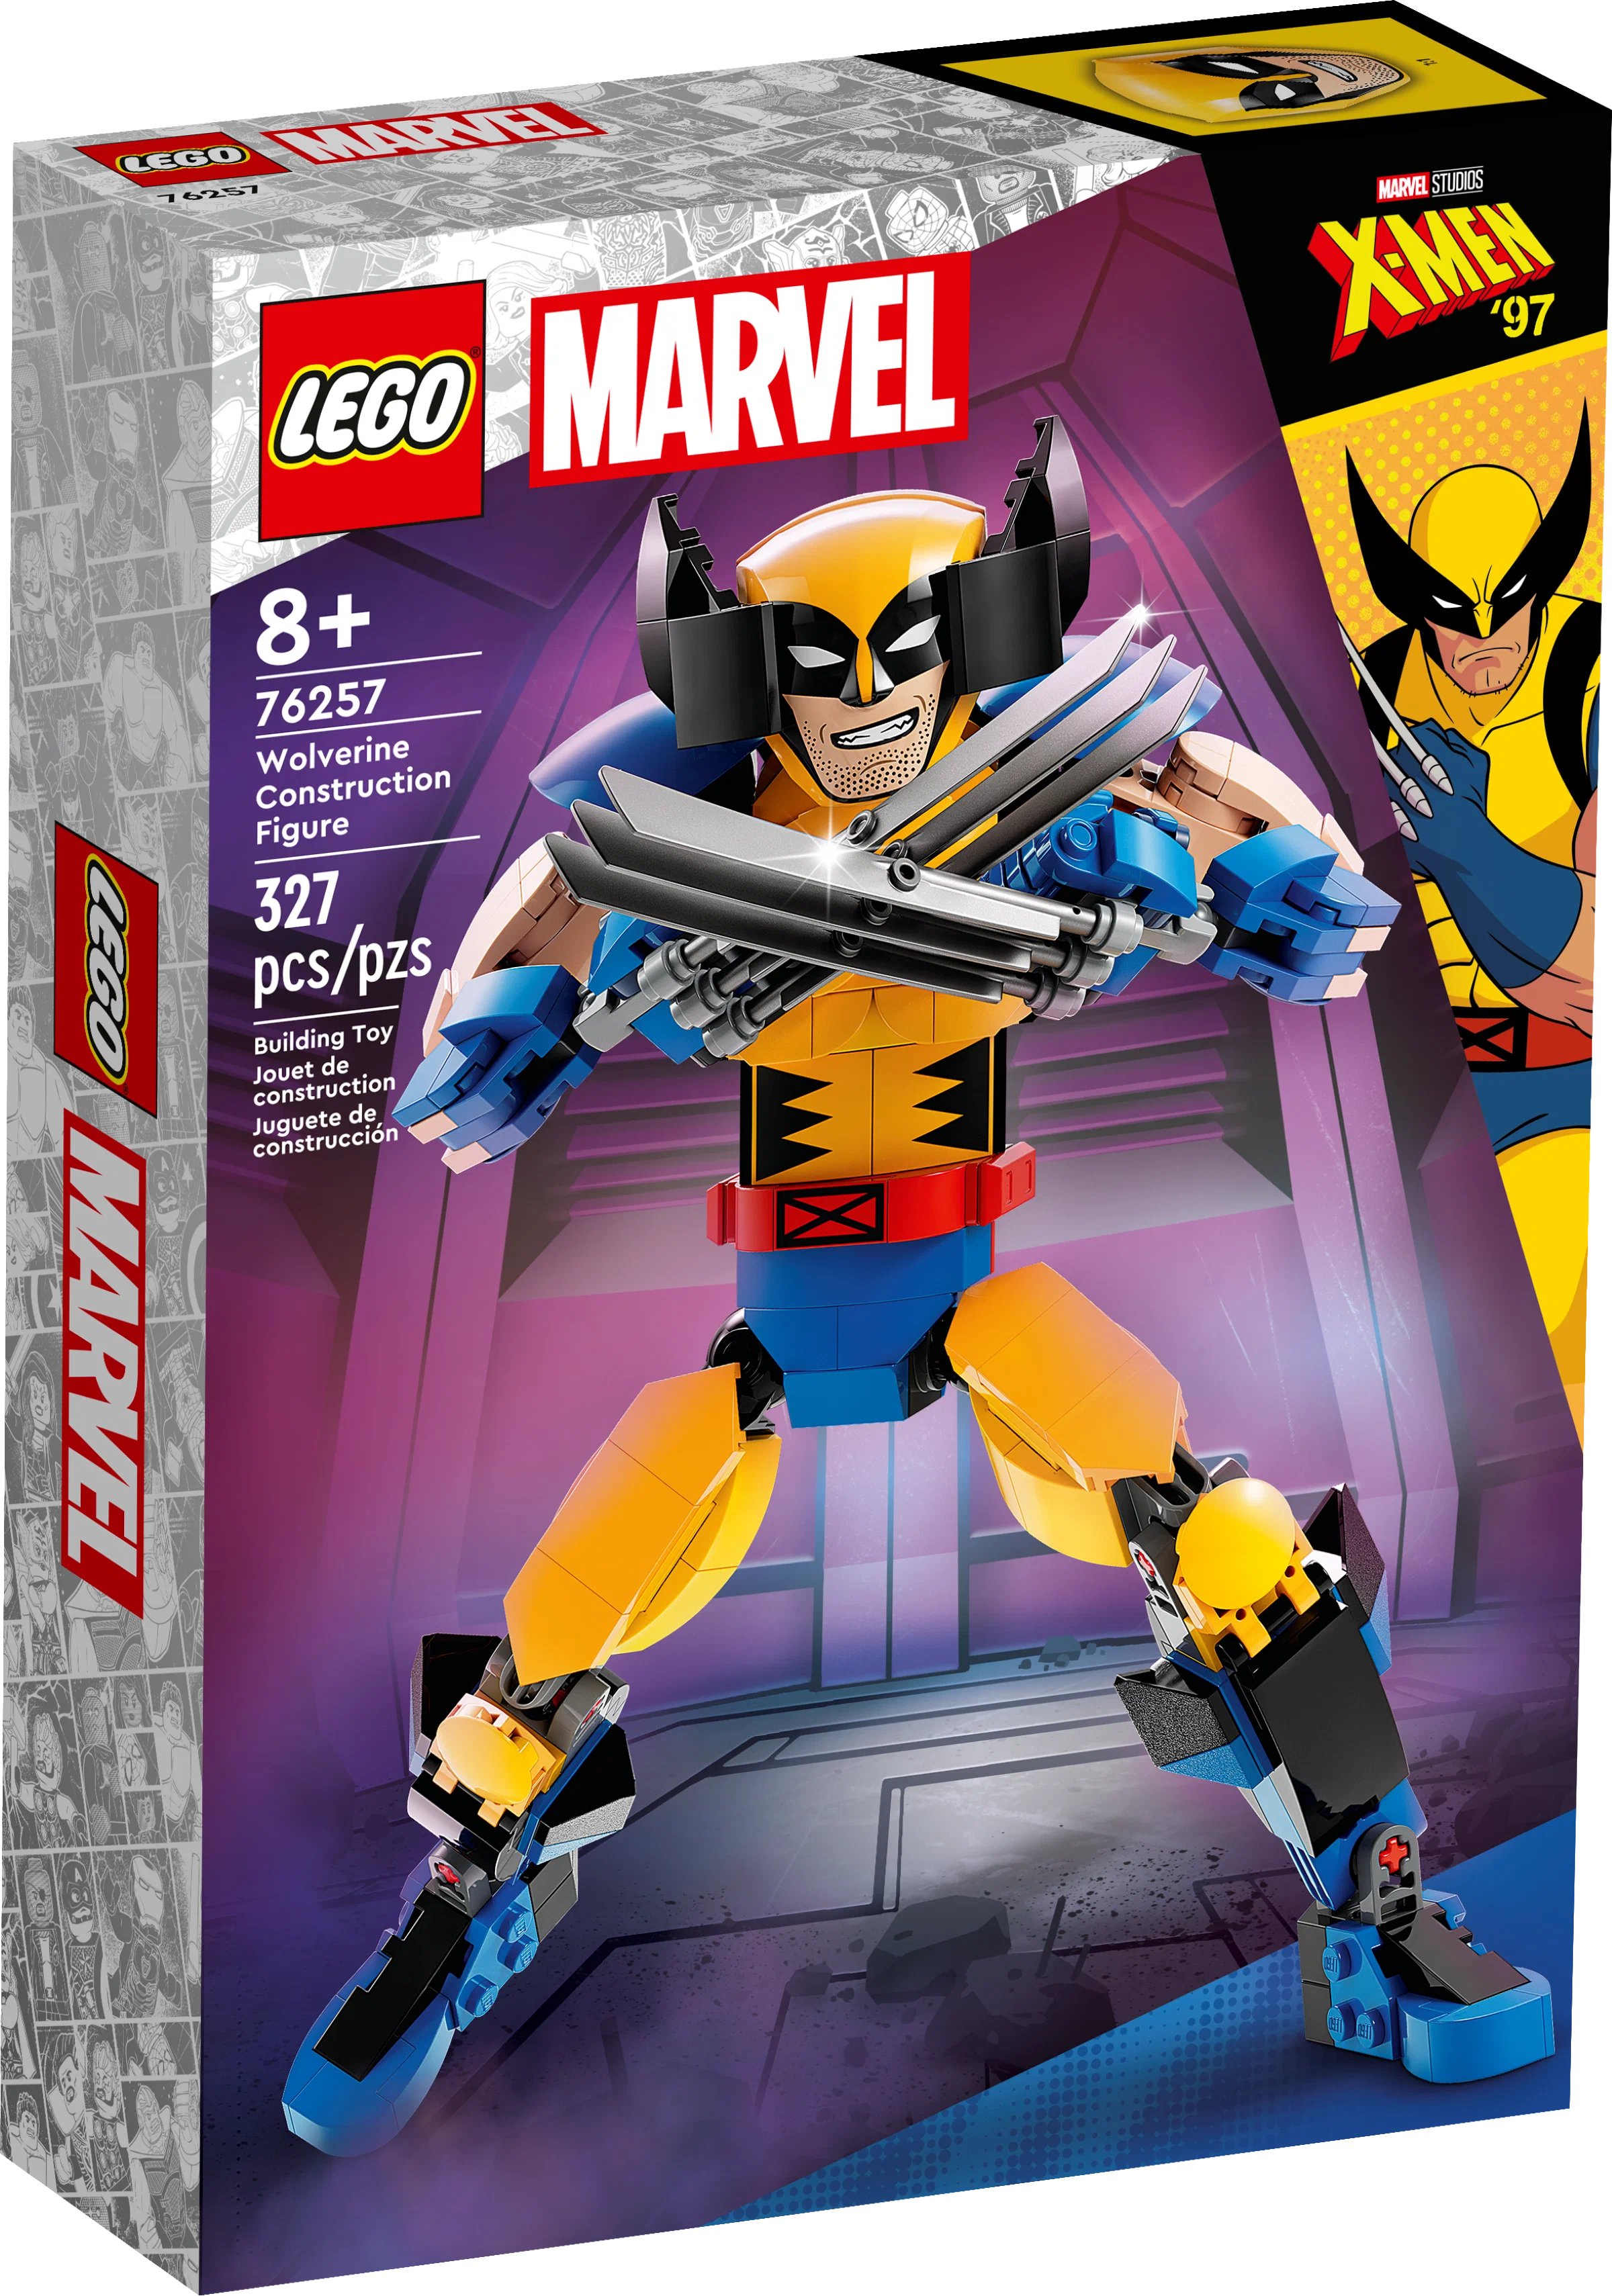 Конструктор Lego Marvel Wolverine Figure 76257, 327 деталей конструктор lego super heroes 76257 росомаха